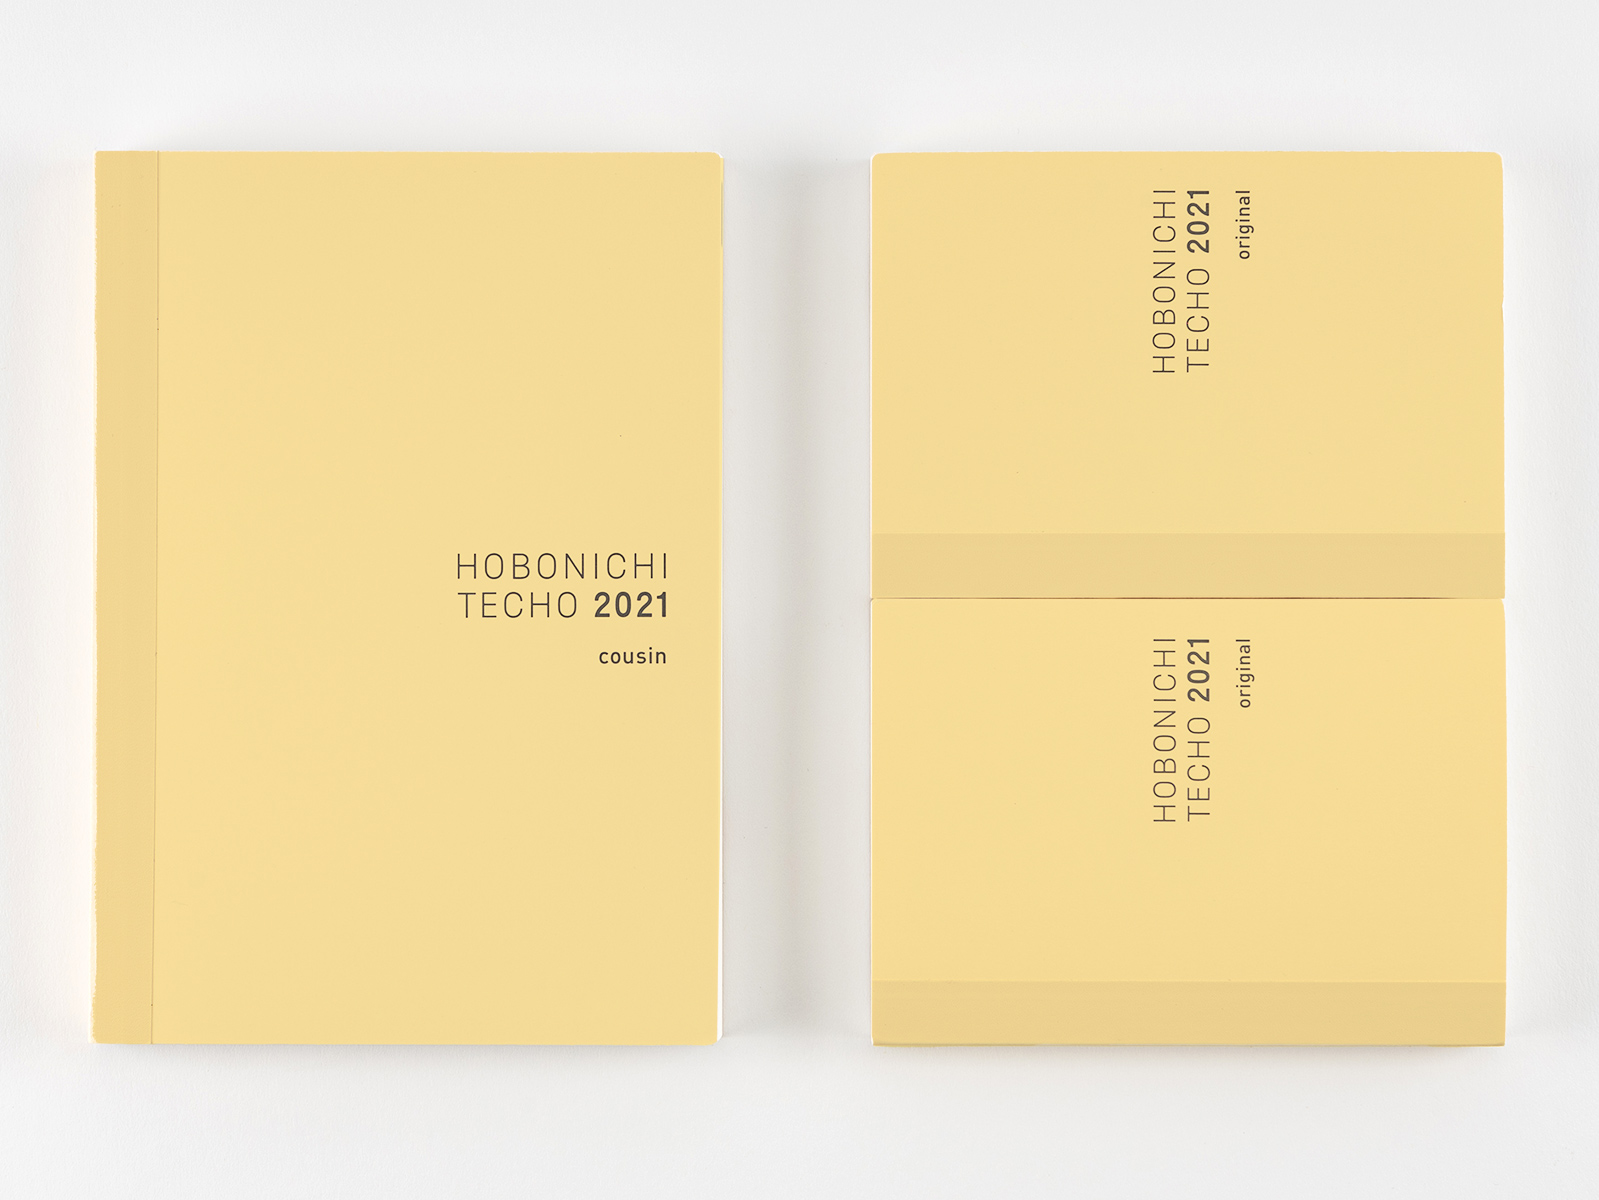 Hobonichi Store Exclusives - Hobonichi Techo 2021